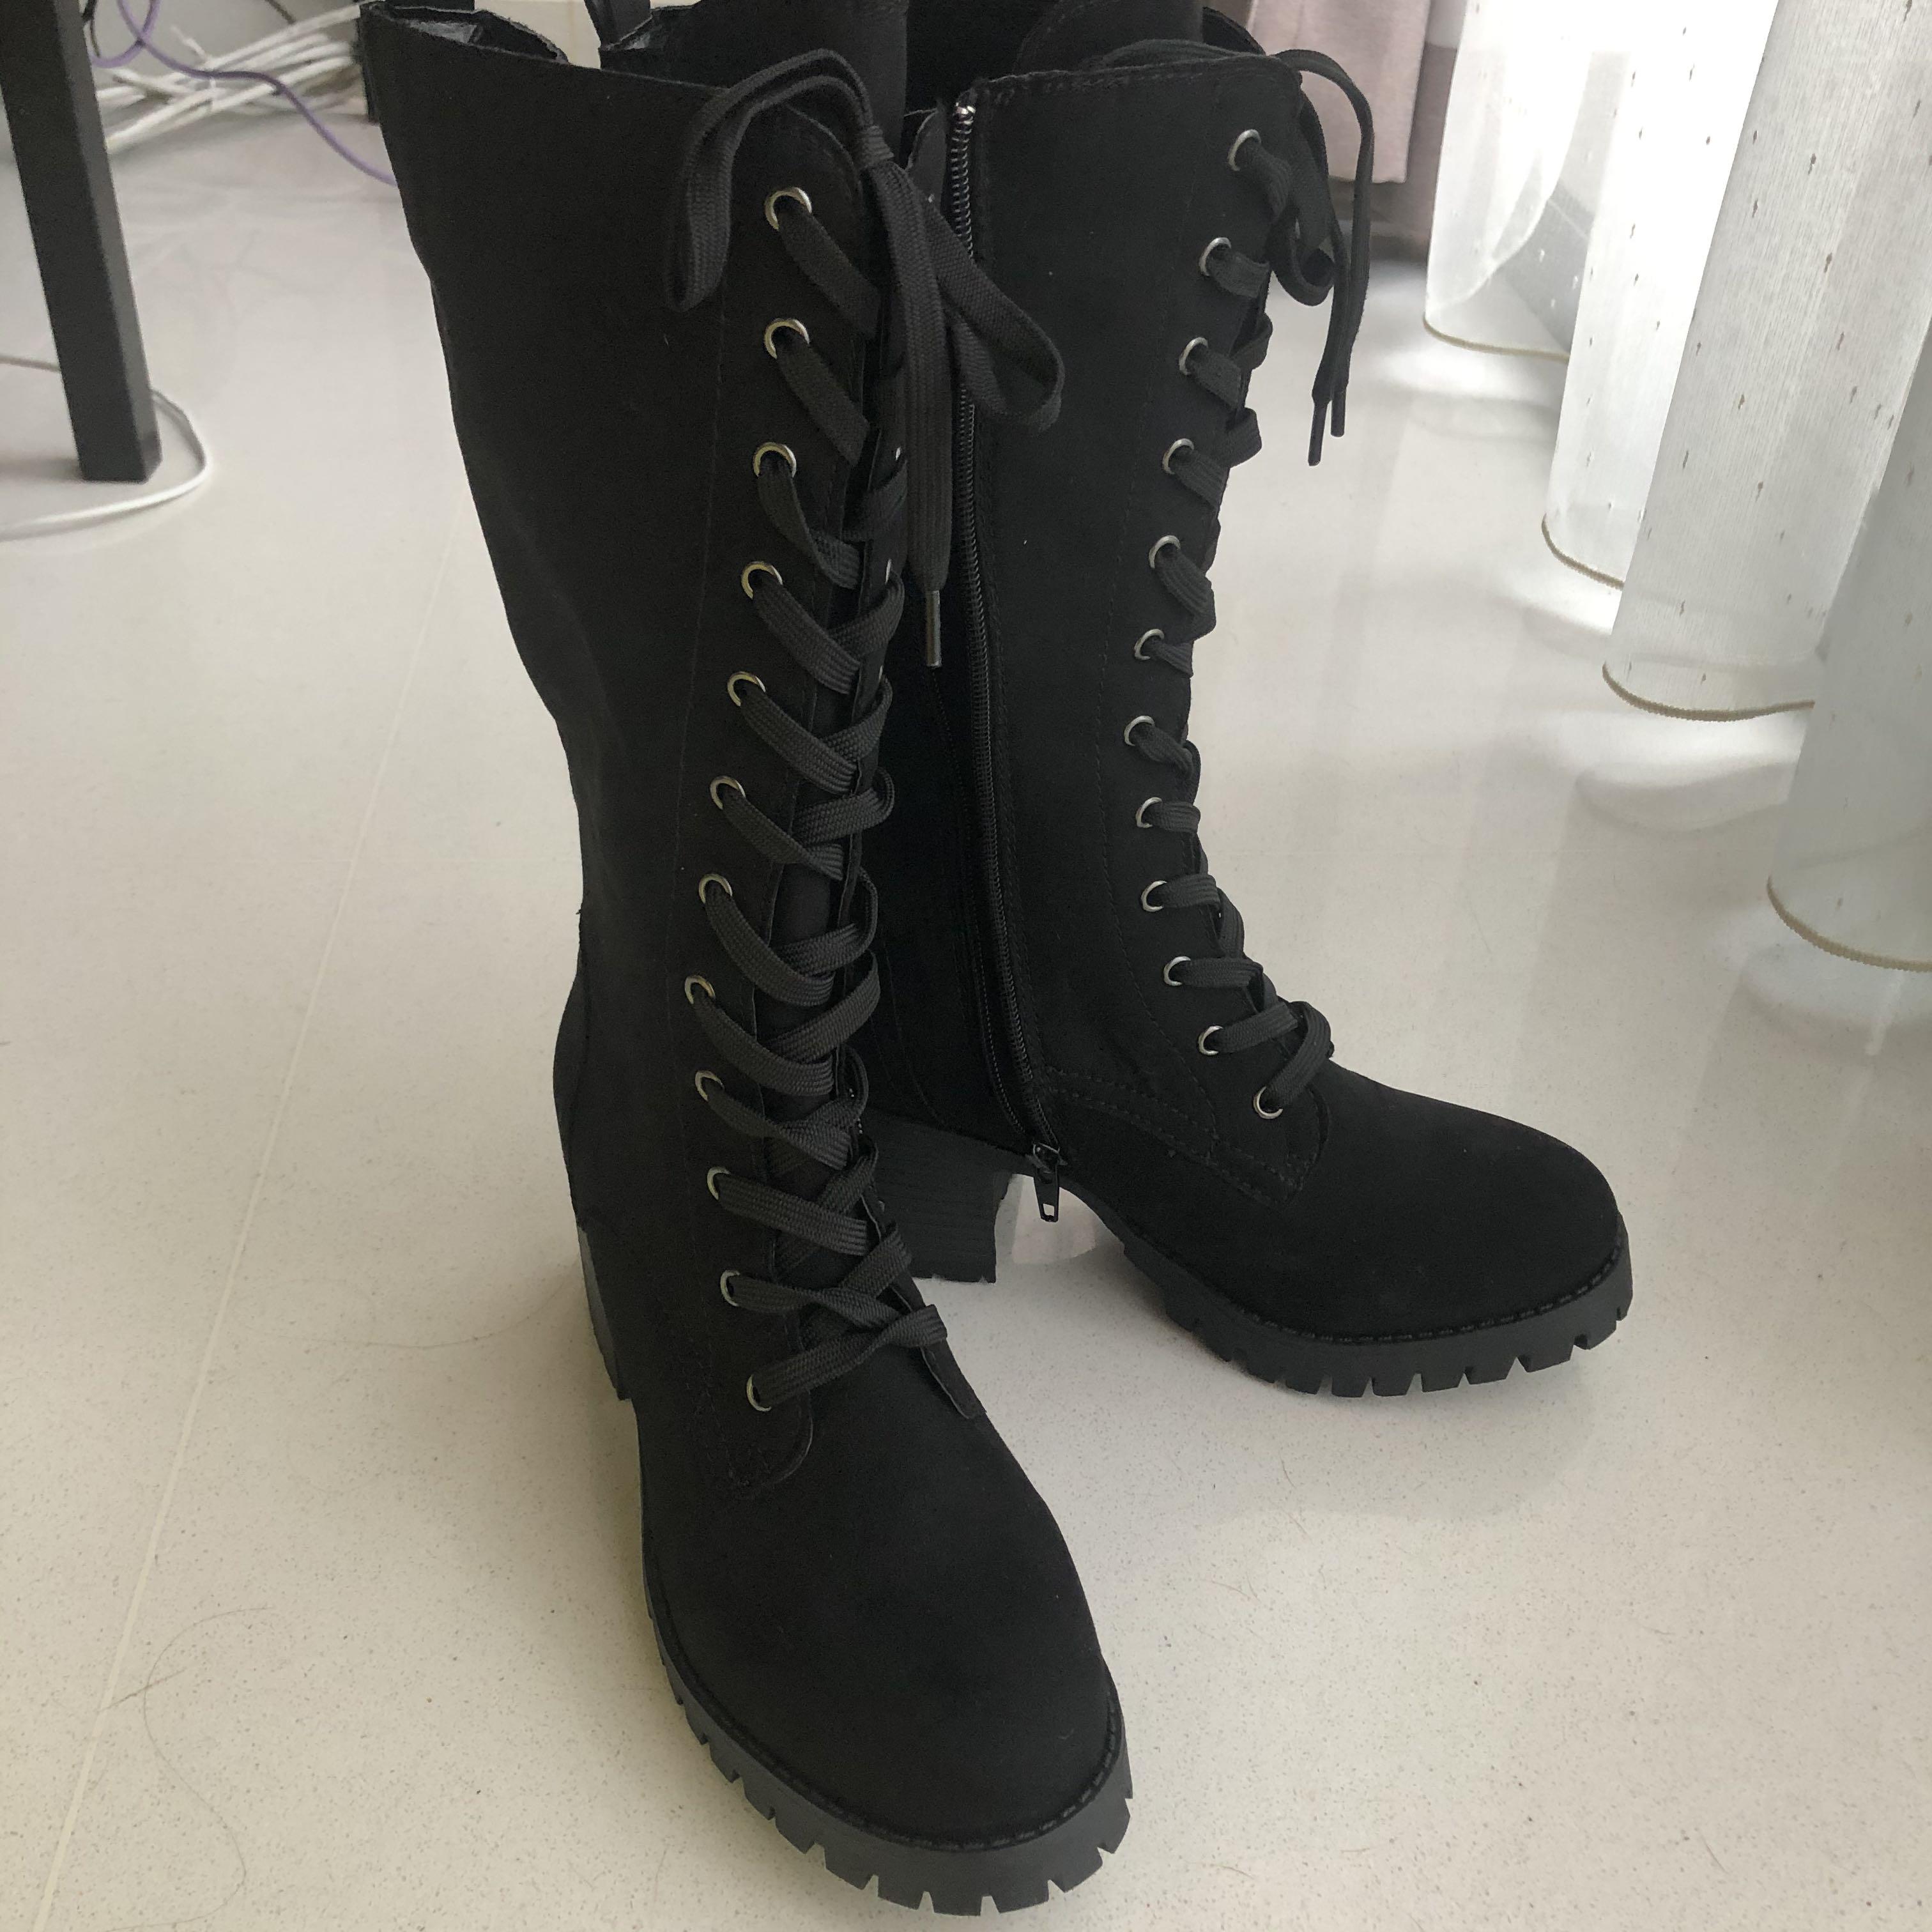 women's combat boots near me